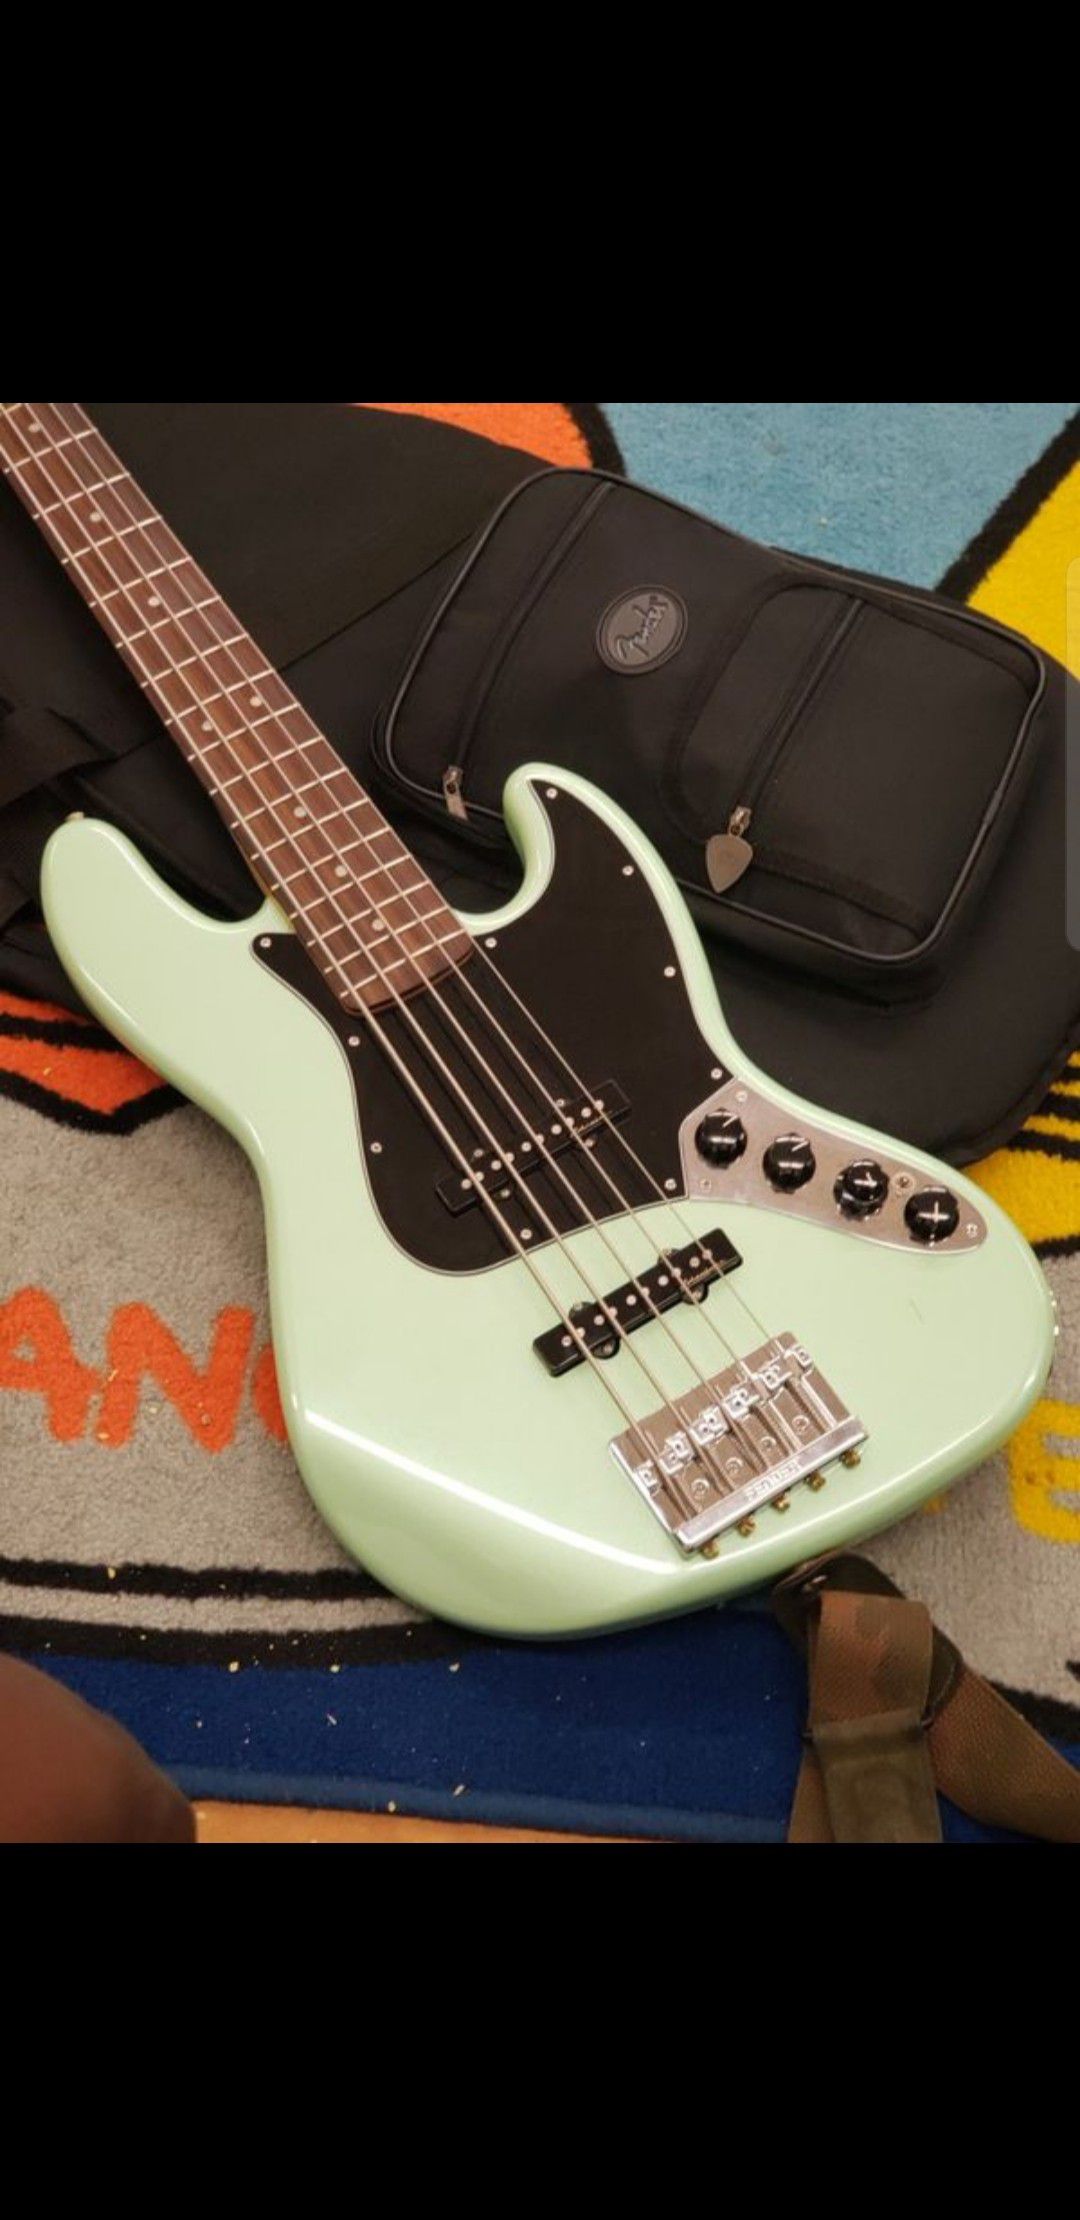 Fender Deluxe V (Seafoam green) active/passive